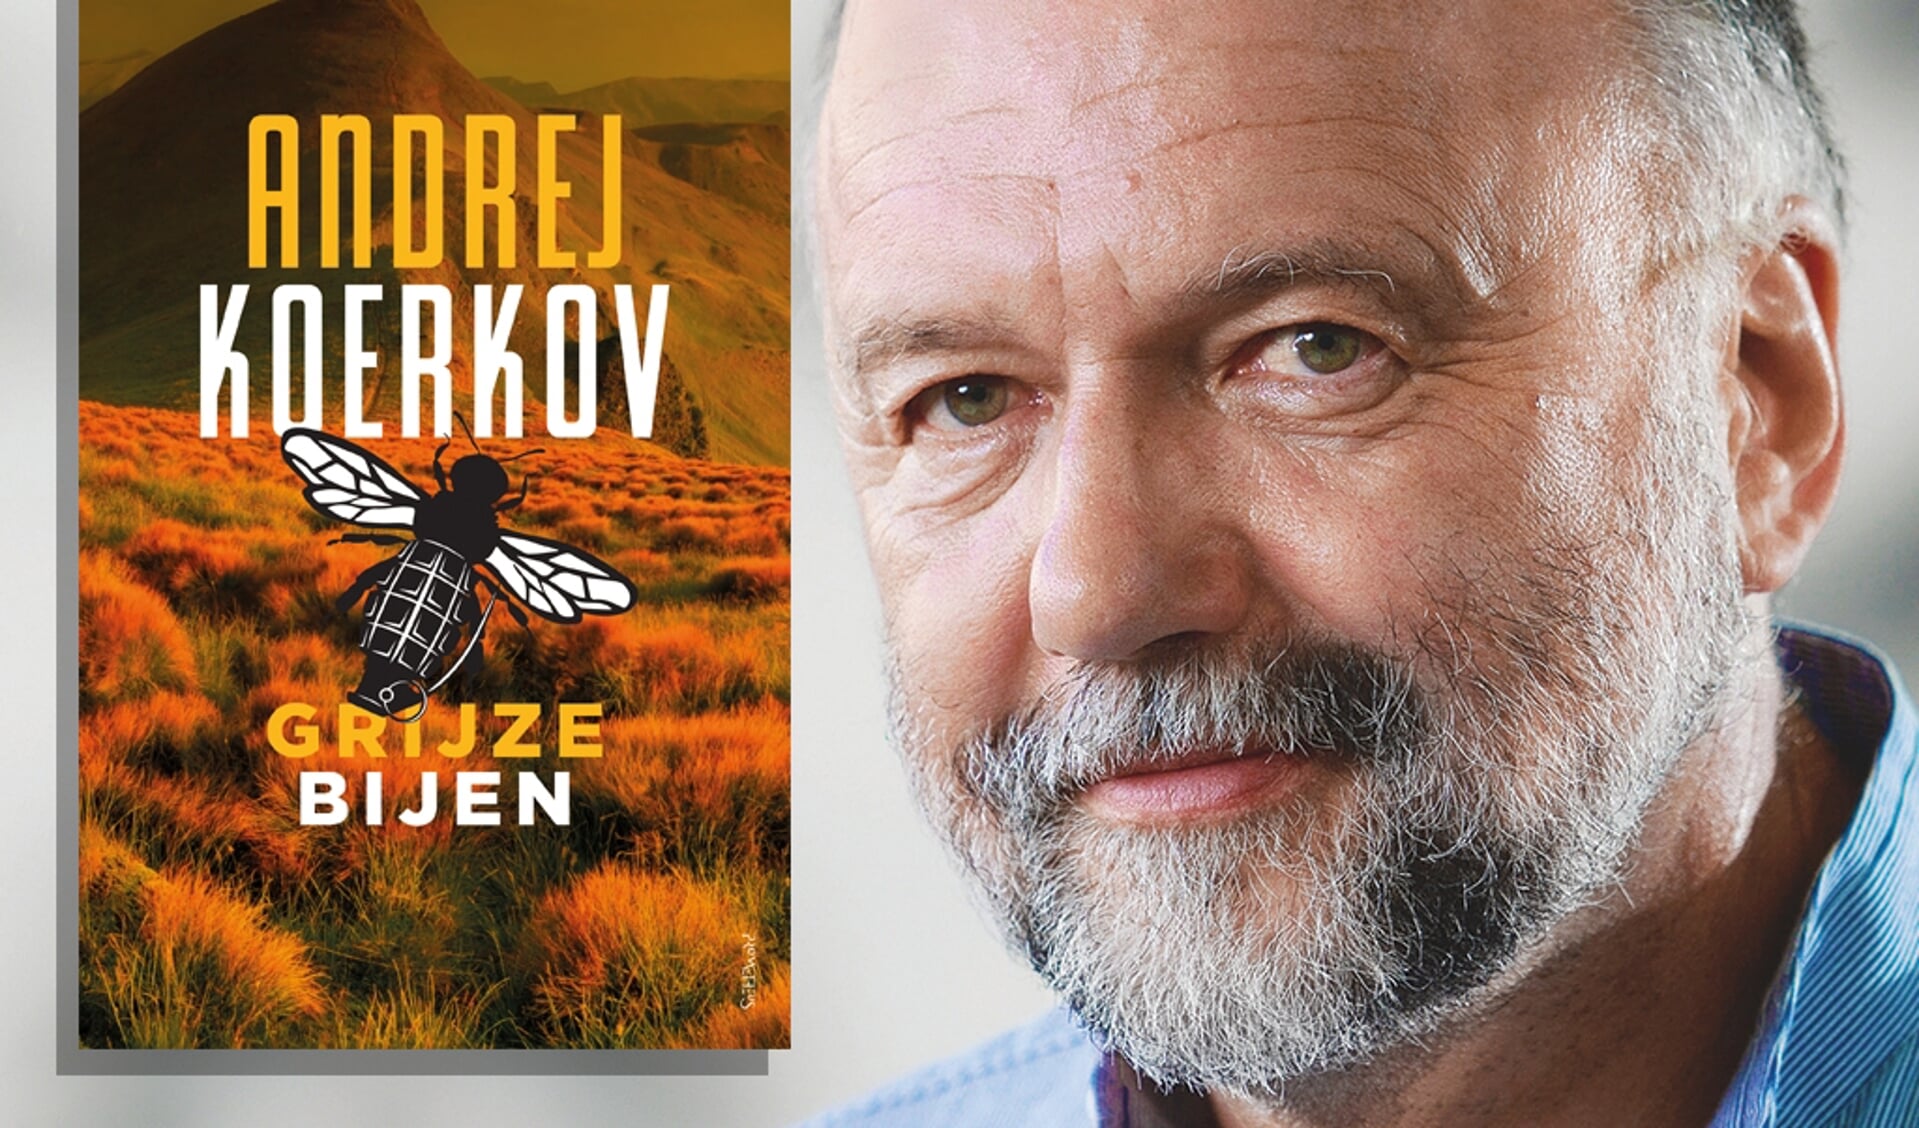  Bezoek Oekraïense auteur Andrej Koerkov